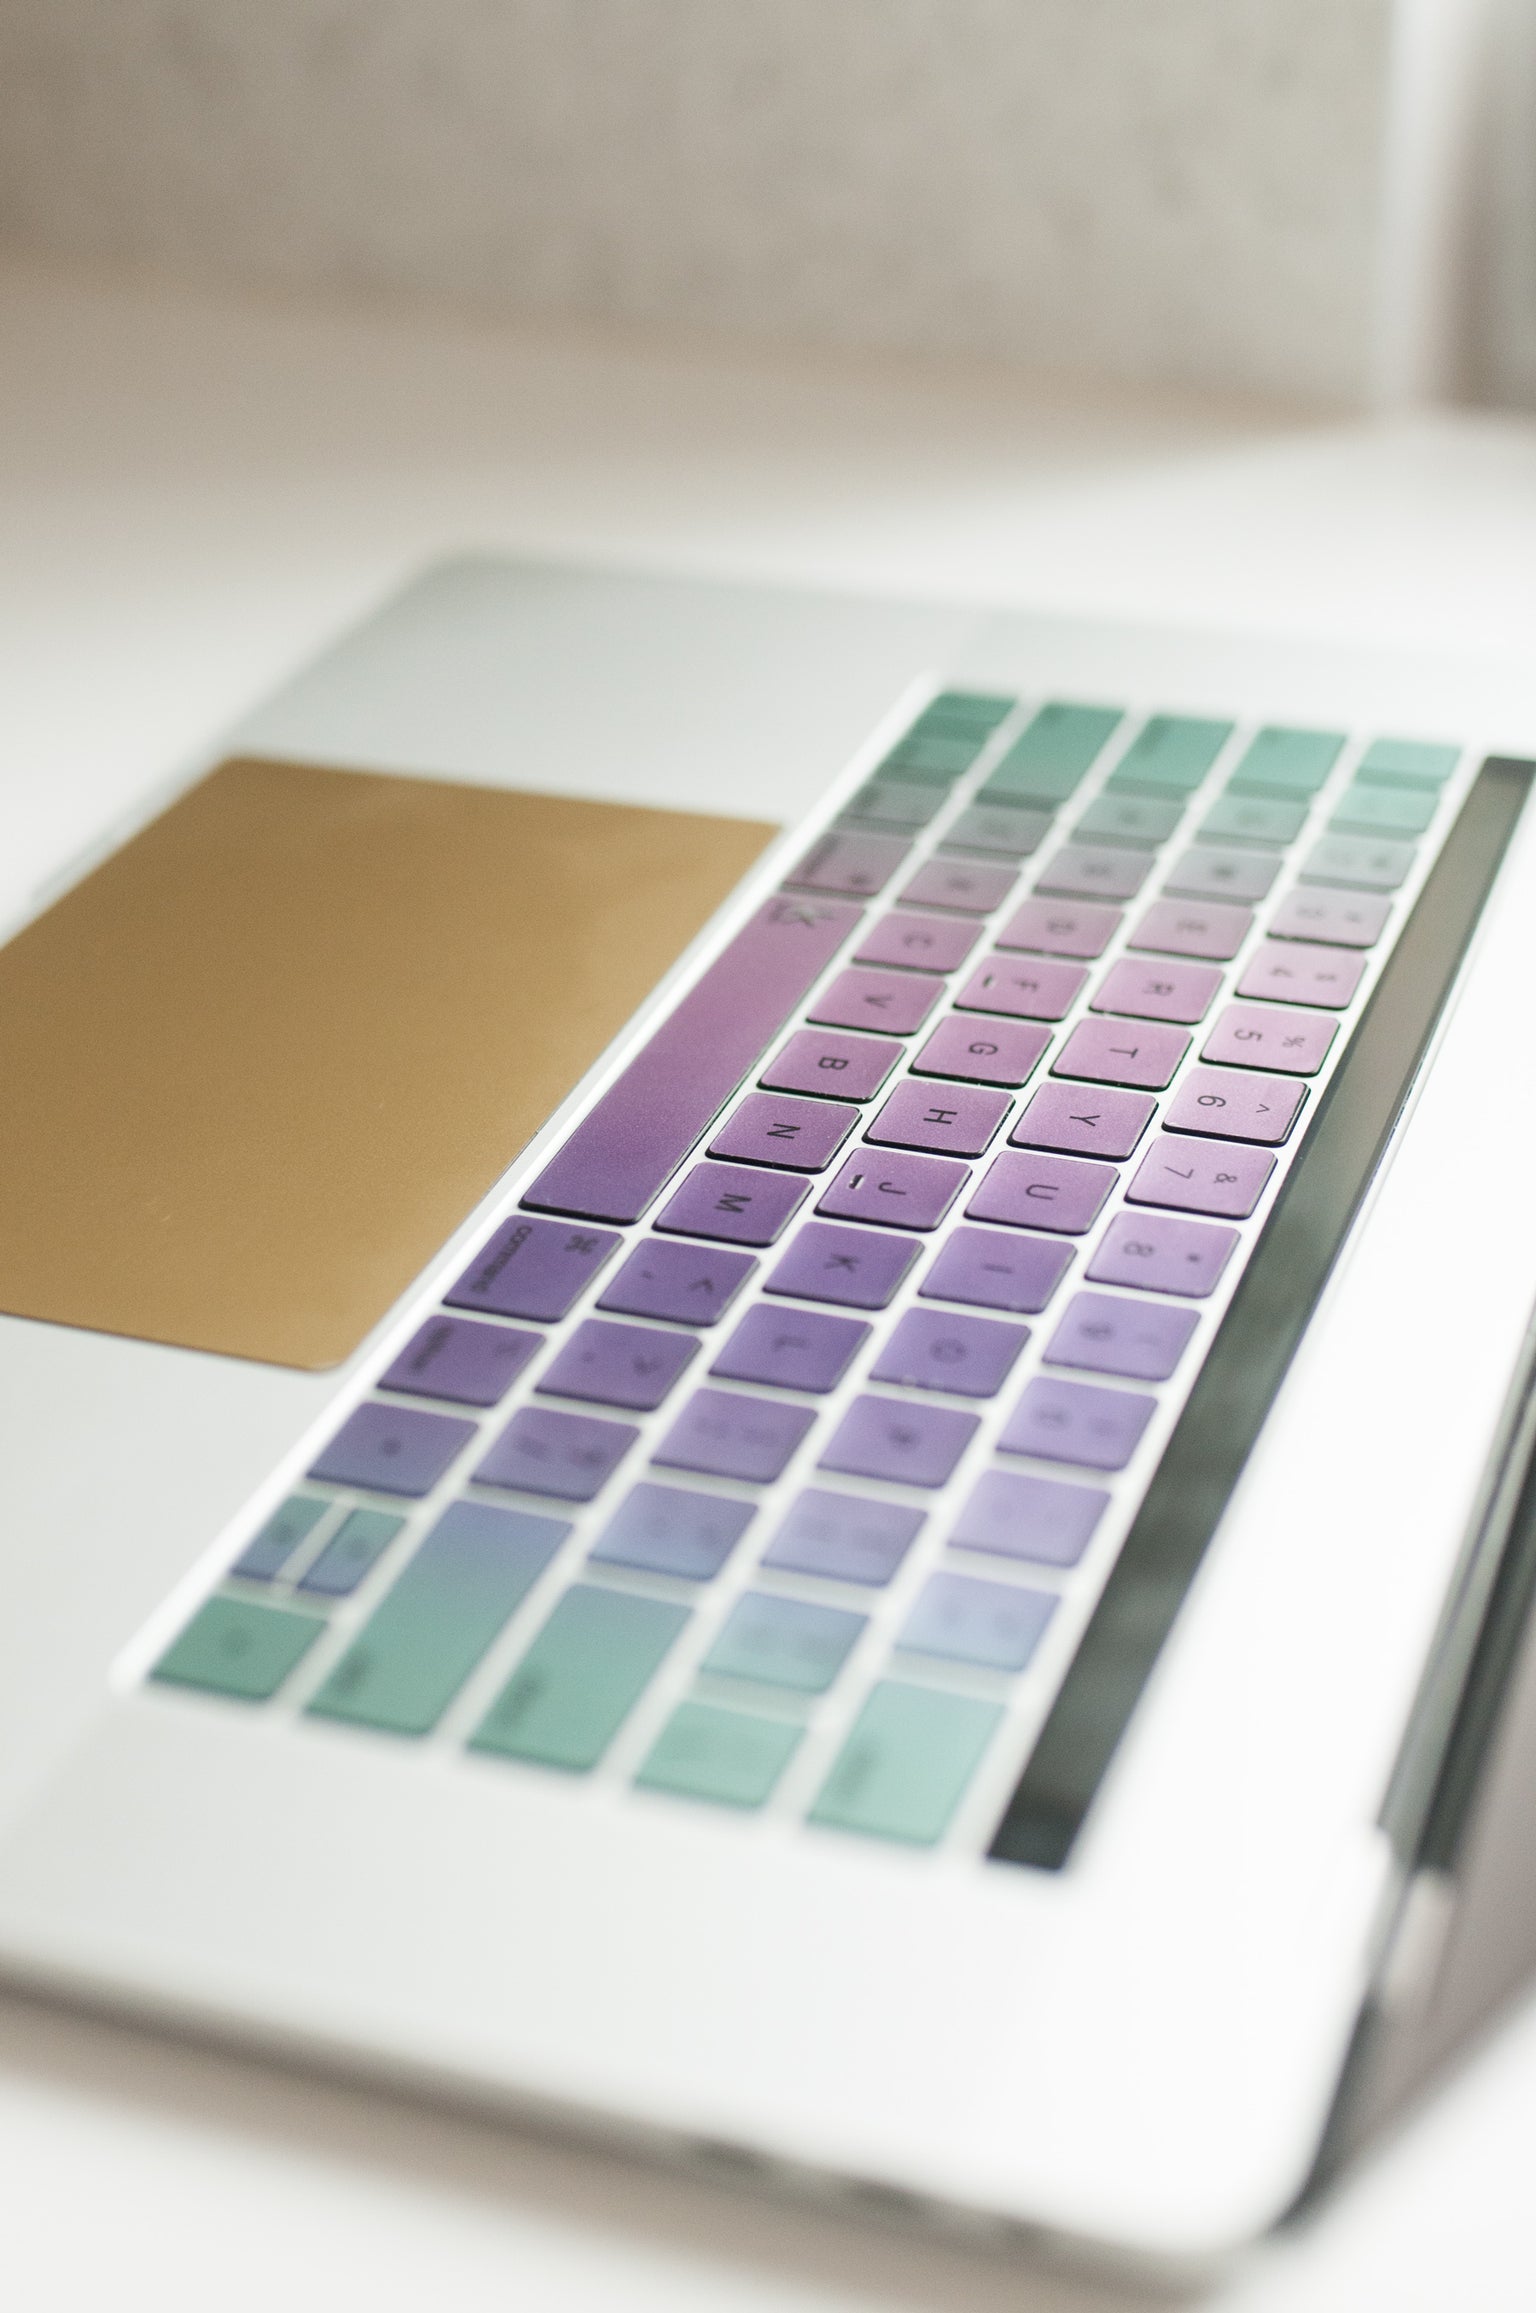 Metallic MacBook keyboard stickers in kawaii style